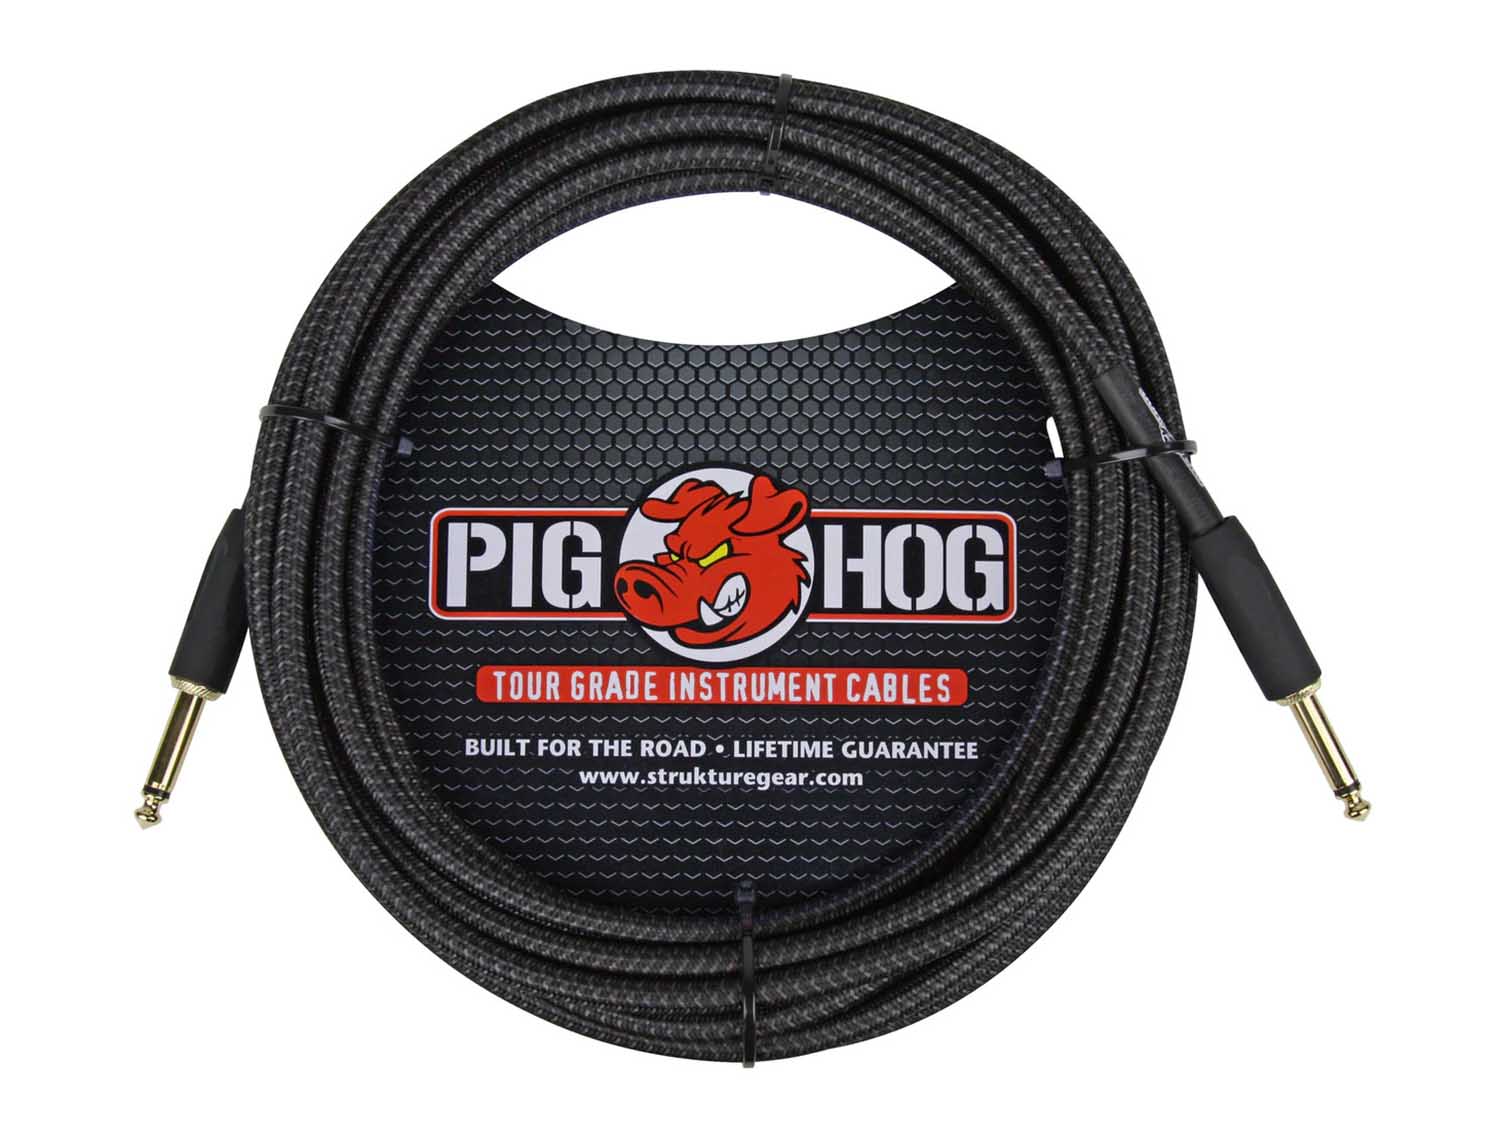 Pig Hog PCH20BK, 20-ft Instrument Cable - Black Woven - Hollywood DJ